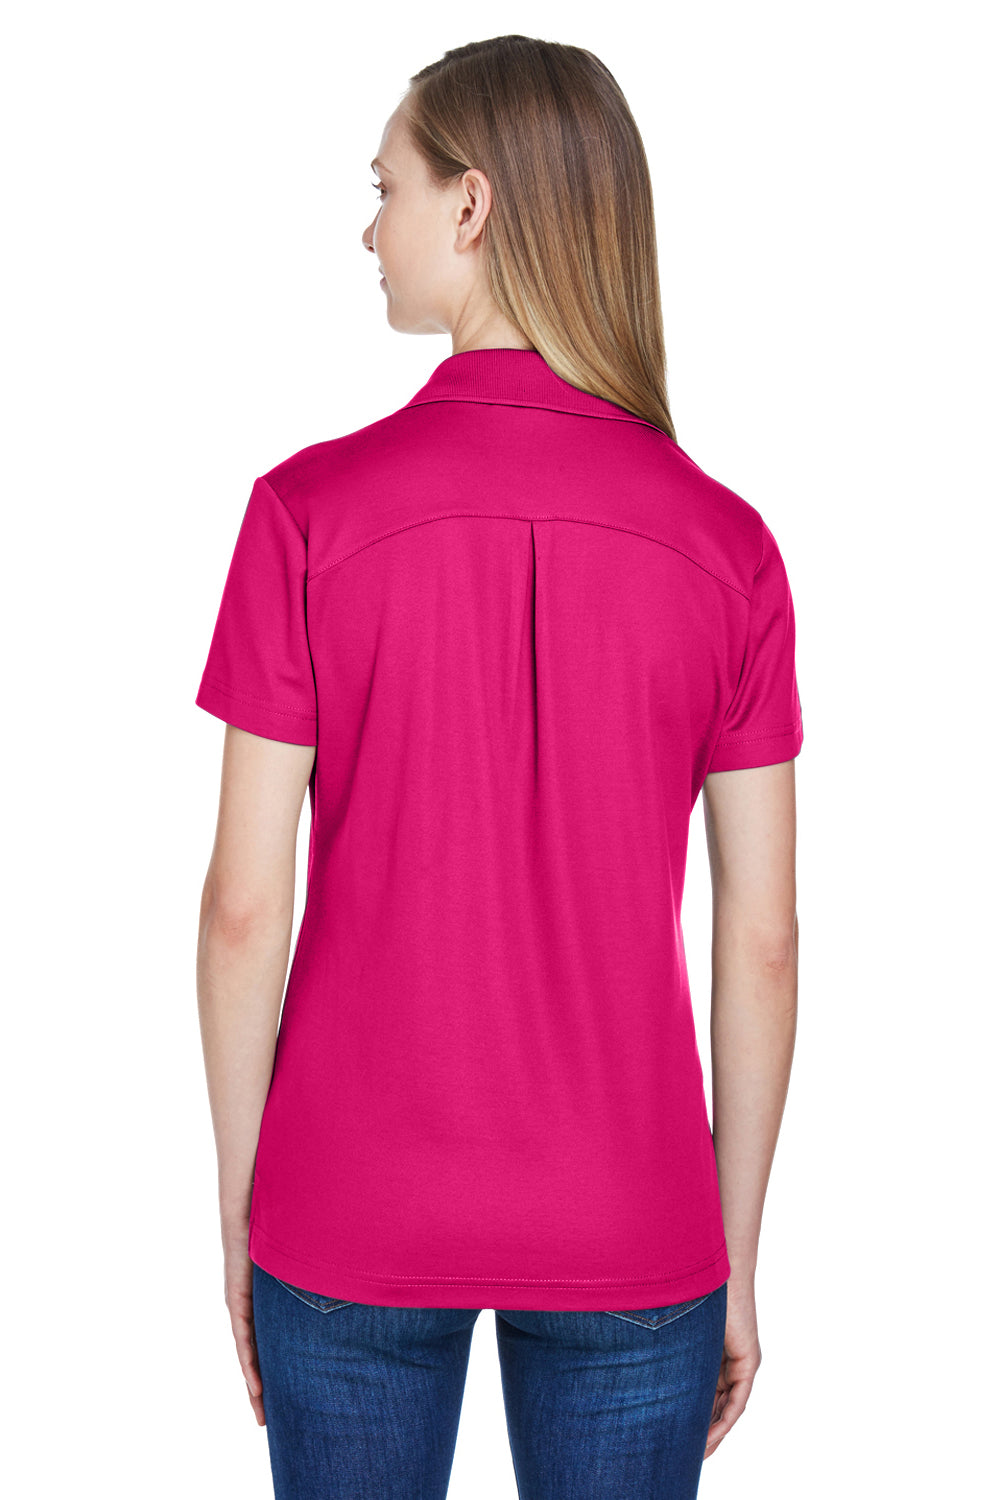 Devon & Jones DG20W CrownLux Performance Moisture Wicking Short Sleeve Polo Shirt Raspberry Pink Back